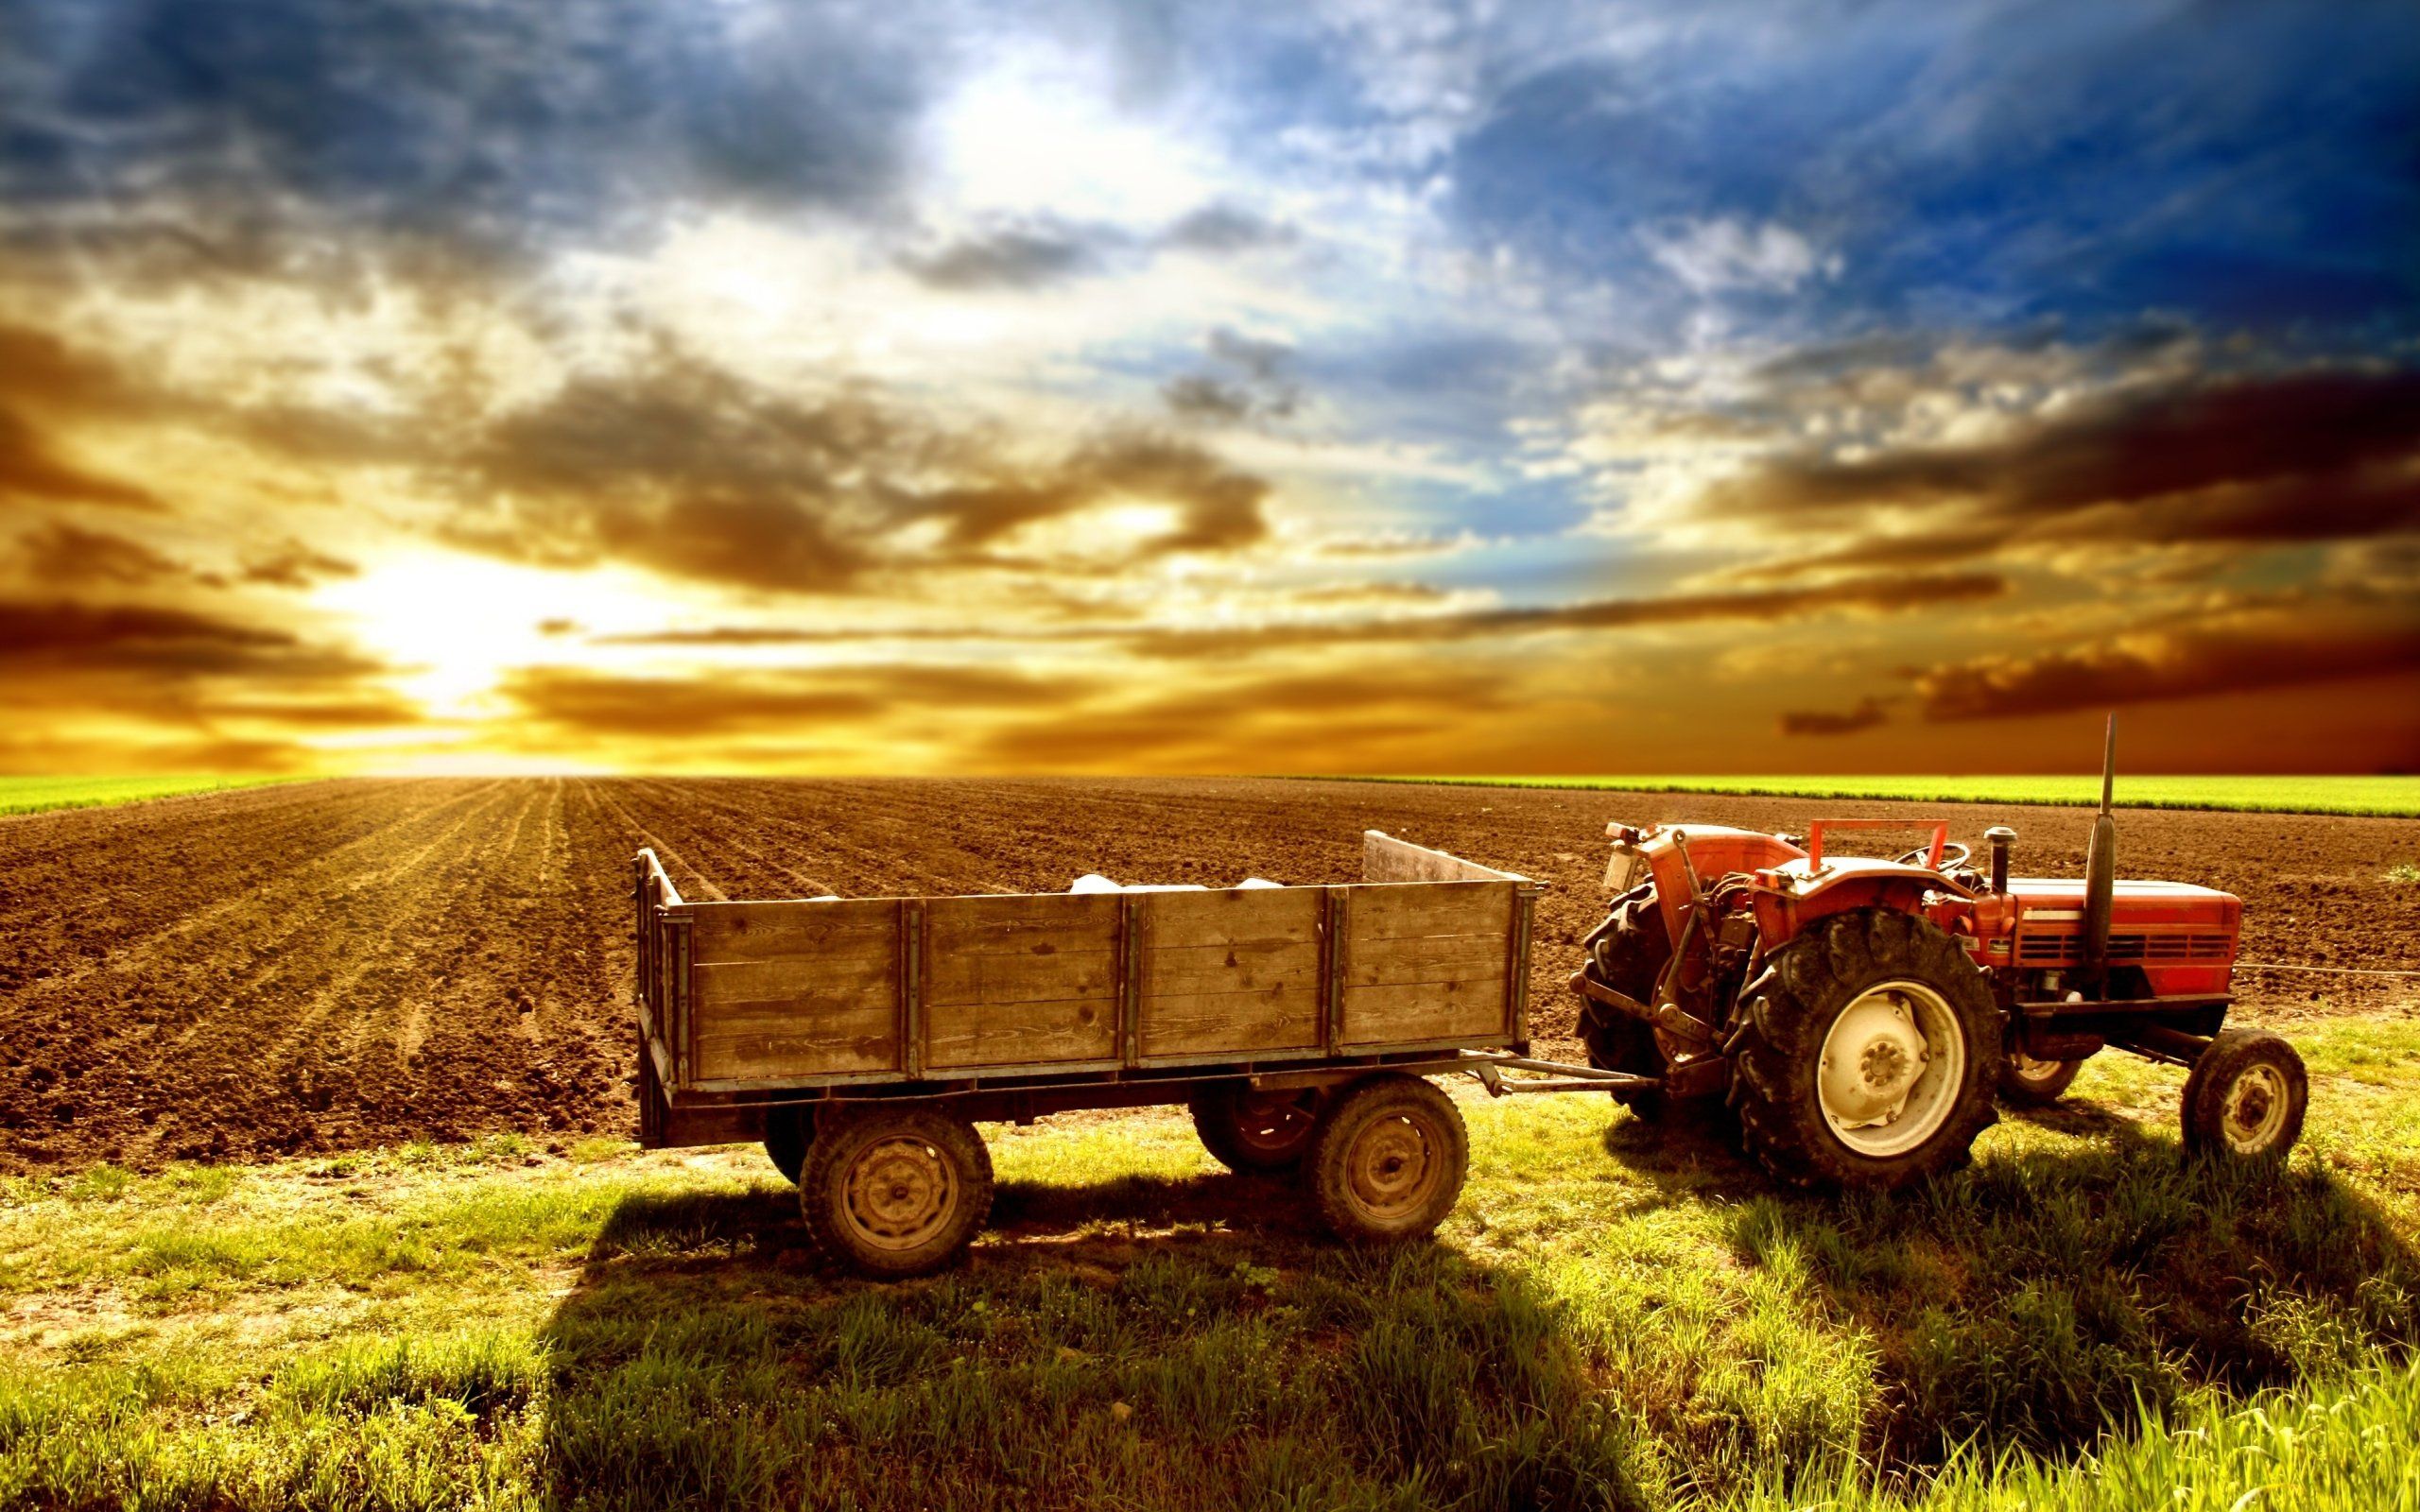  Traktor Hintergrundbild 2560x1600. Tractor Wallpaper for Computer